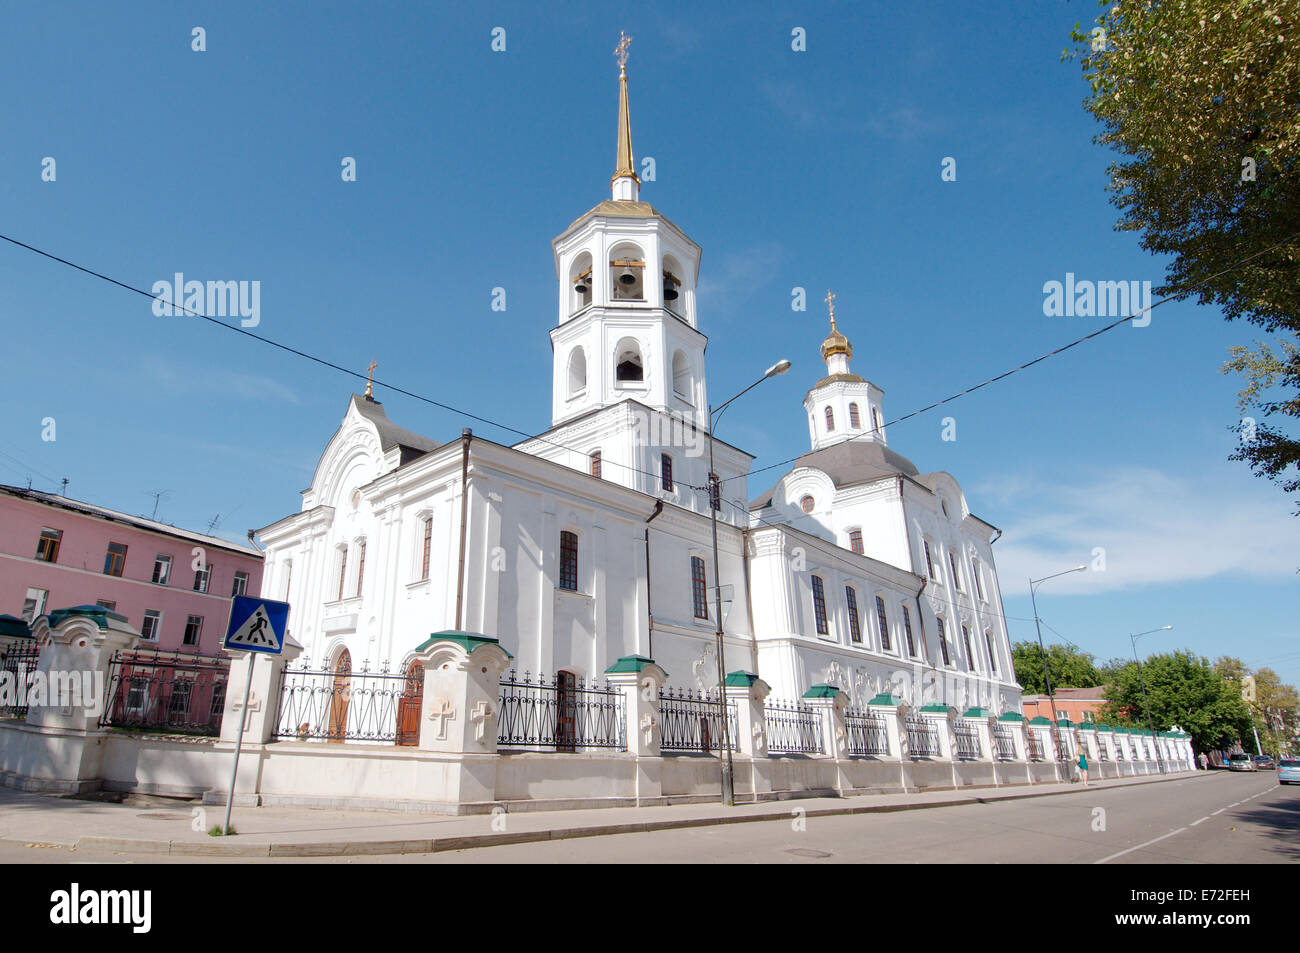 Harlampios church - the Orthodox Church in the historic city center. Irkutsk, Siberia, Russian Federation Stock Photo